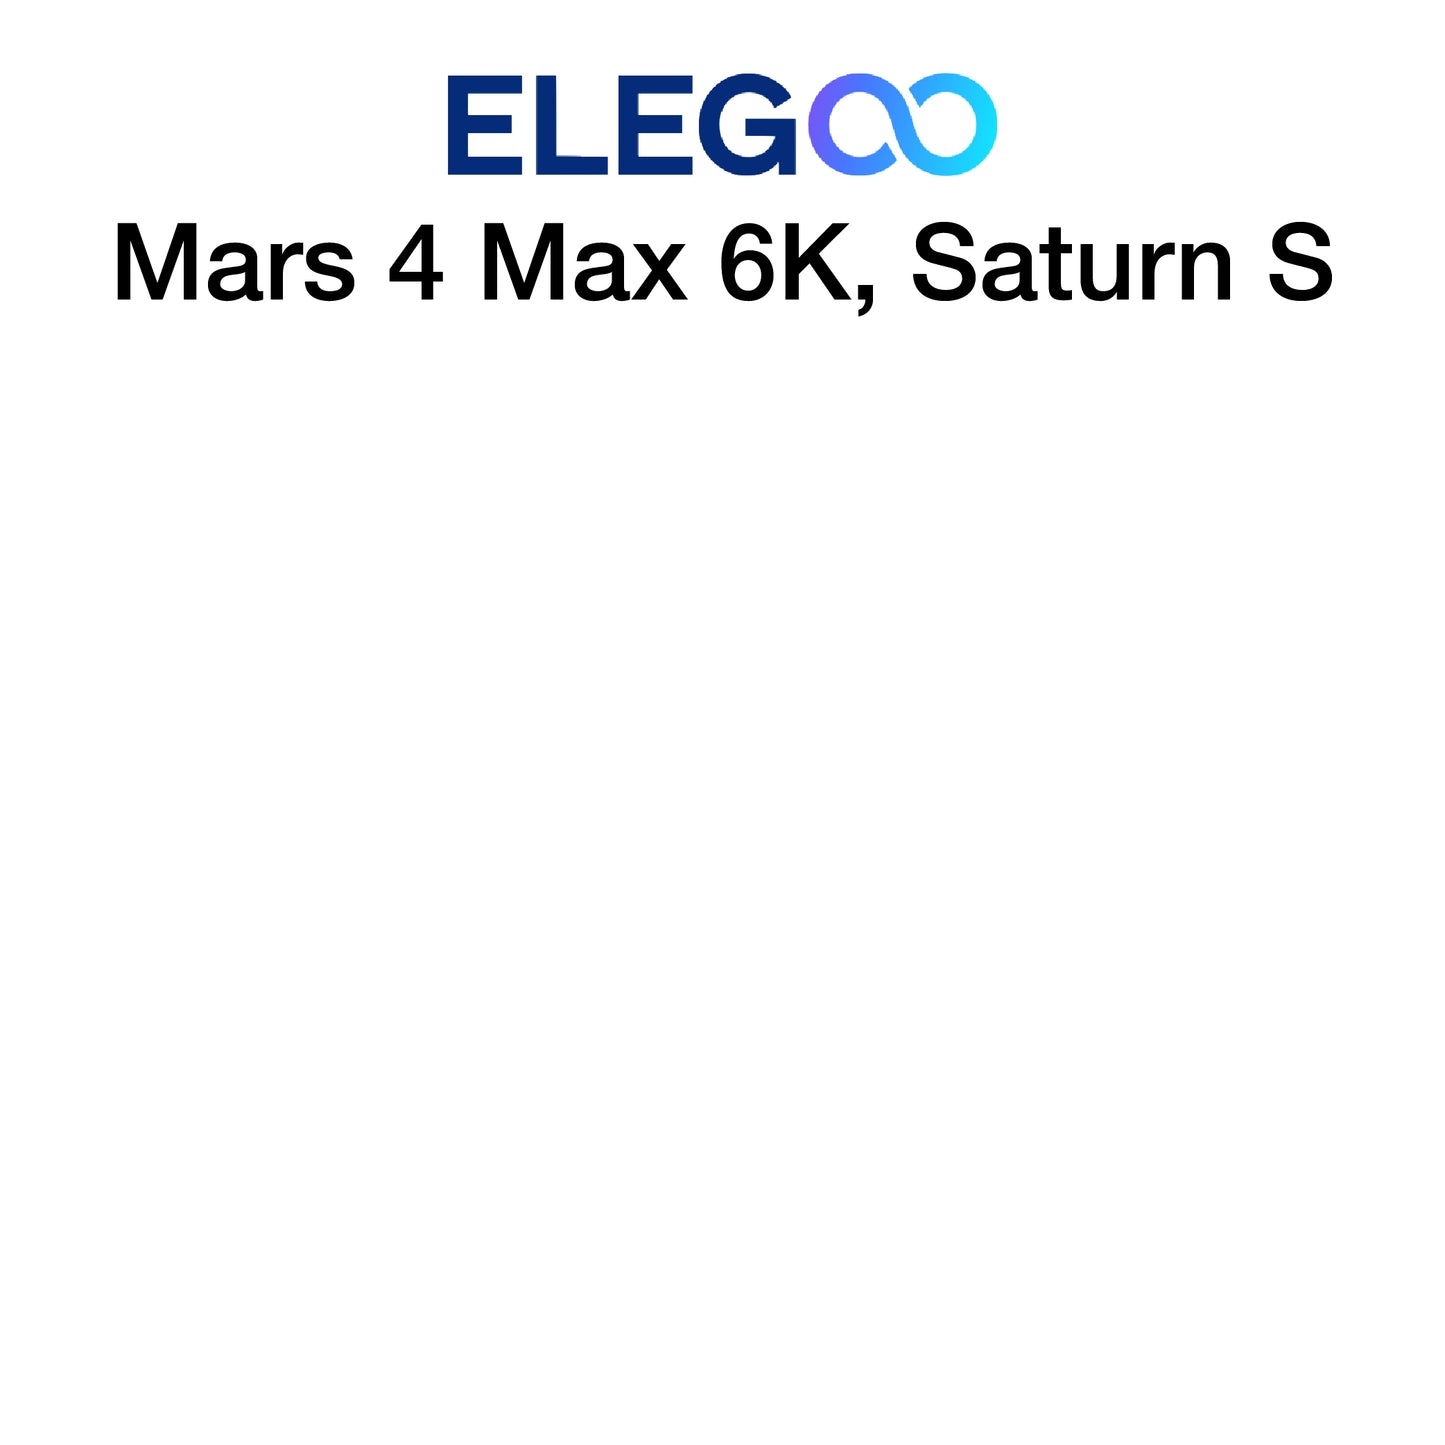 Kit - Elegoo Mars 4 Max 6K and Elegoo Saturn S - 204 x 129